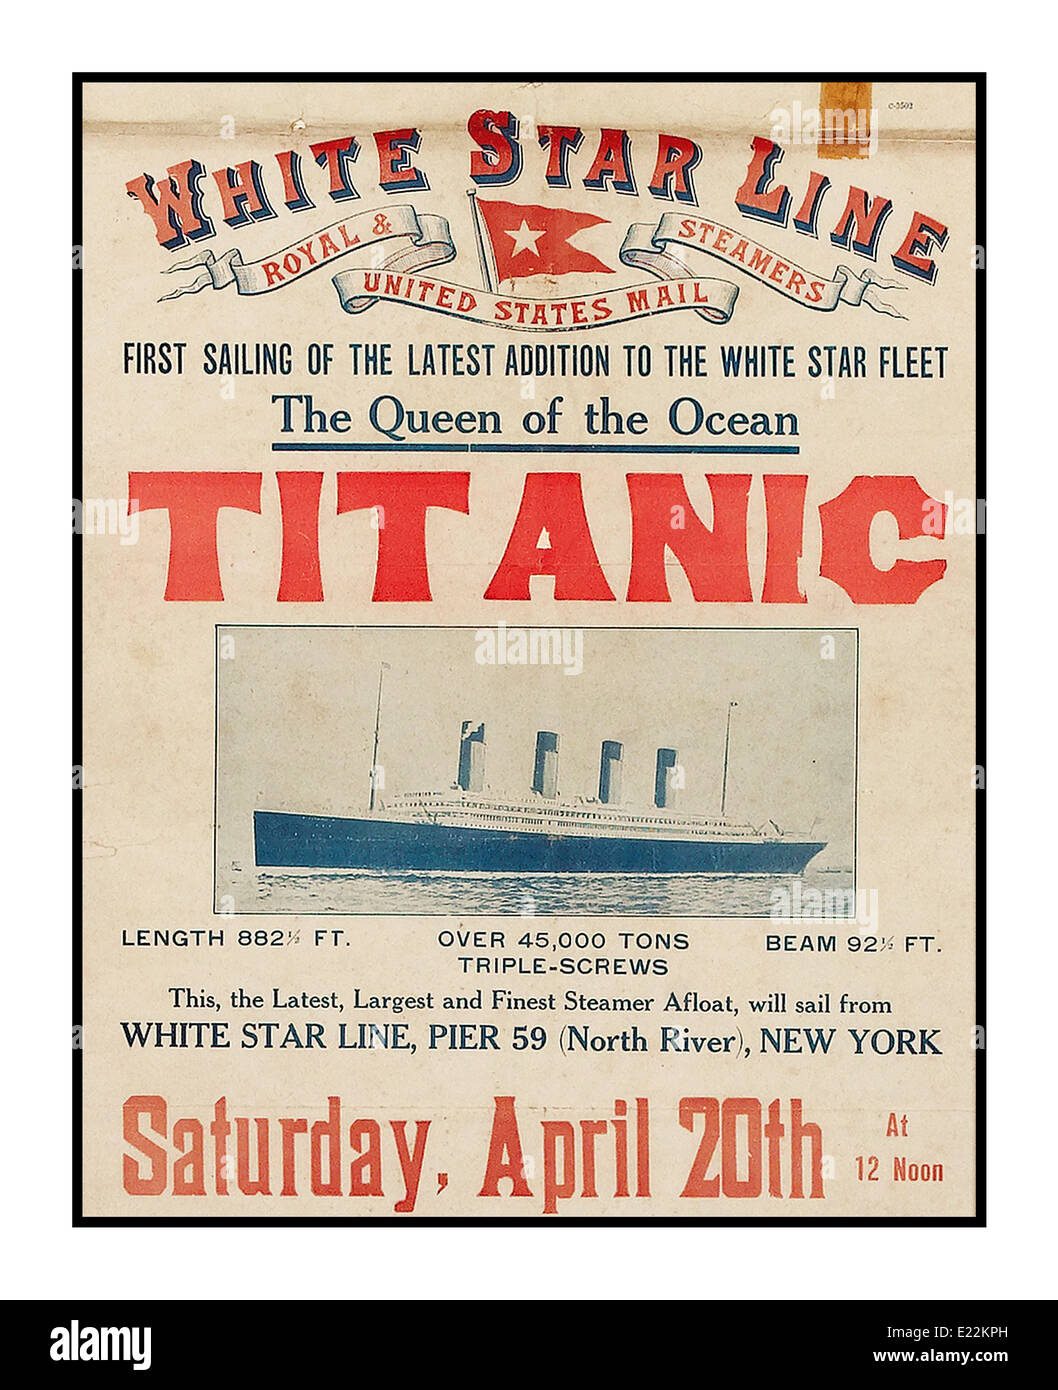 TITANIC Cartel publicidad primera vela de Titanic de Nueva York abril 20th 1912 Titanic se hundió en ruta el 15th 1912 de abril (versión restaurada 2F9G601) Foto de stock